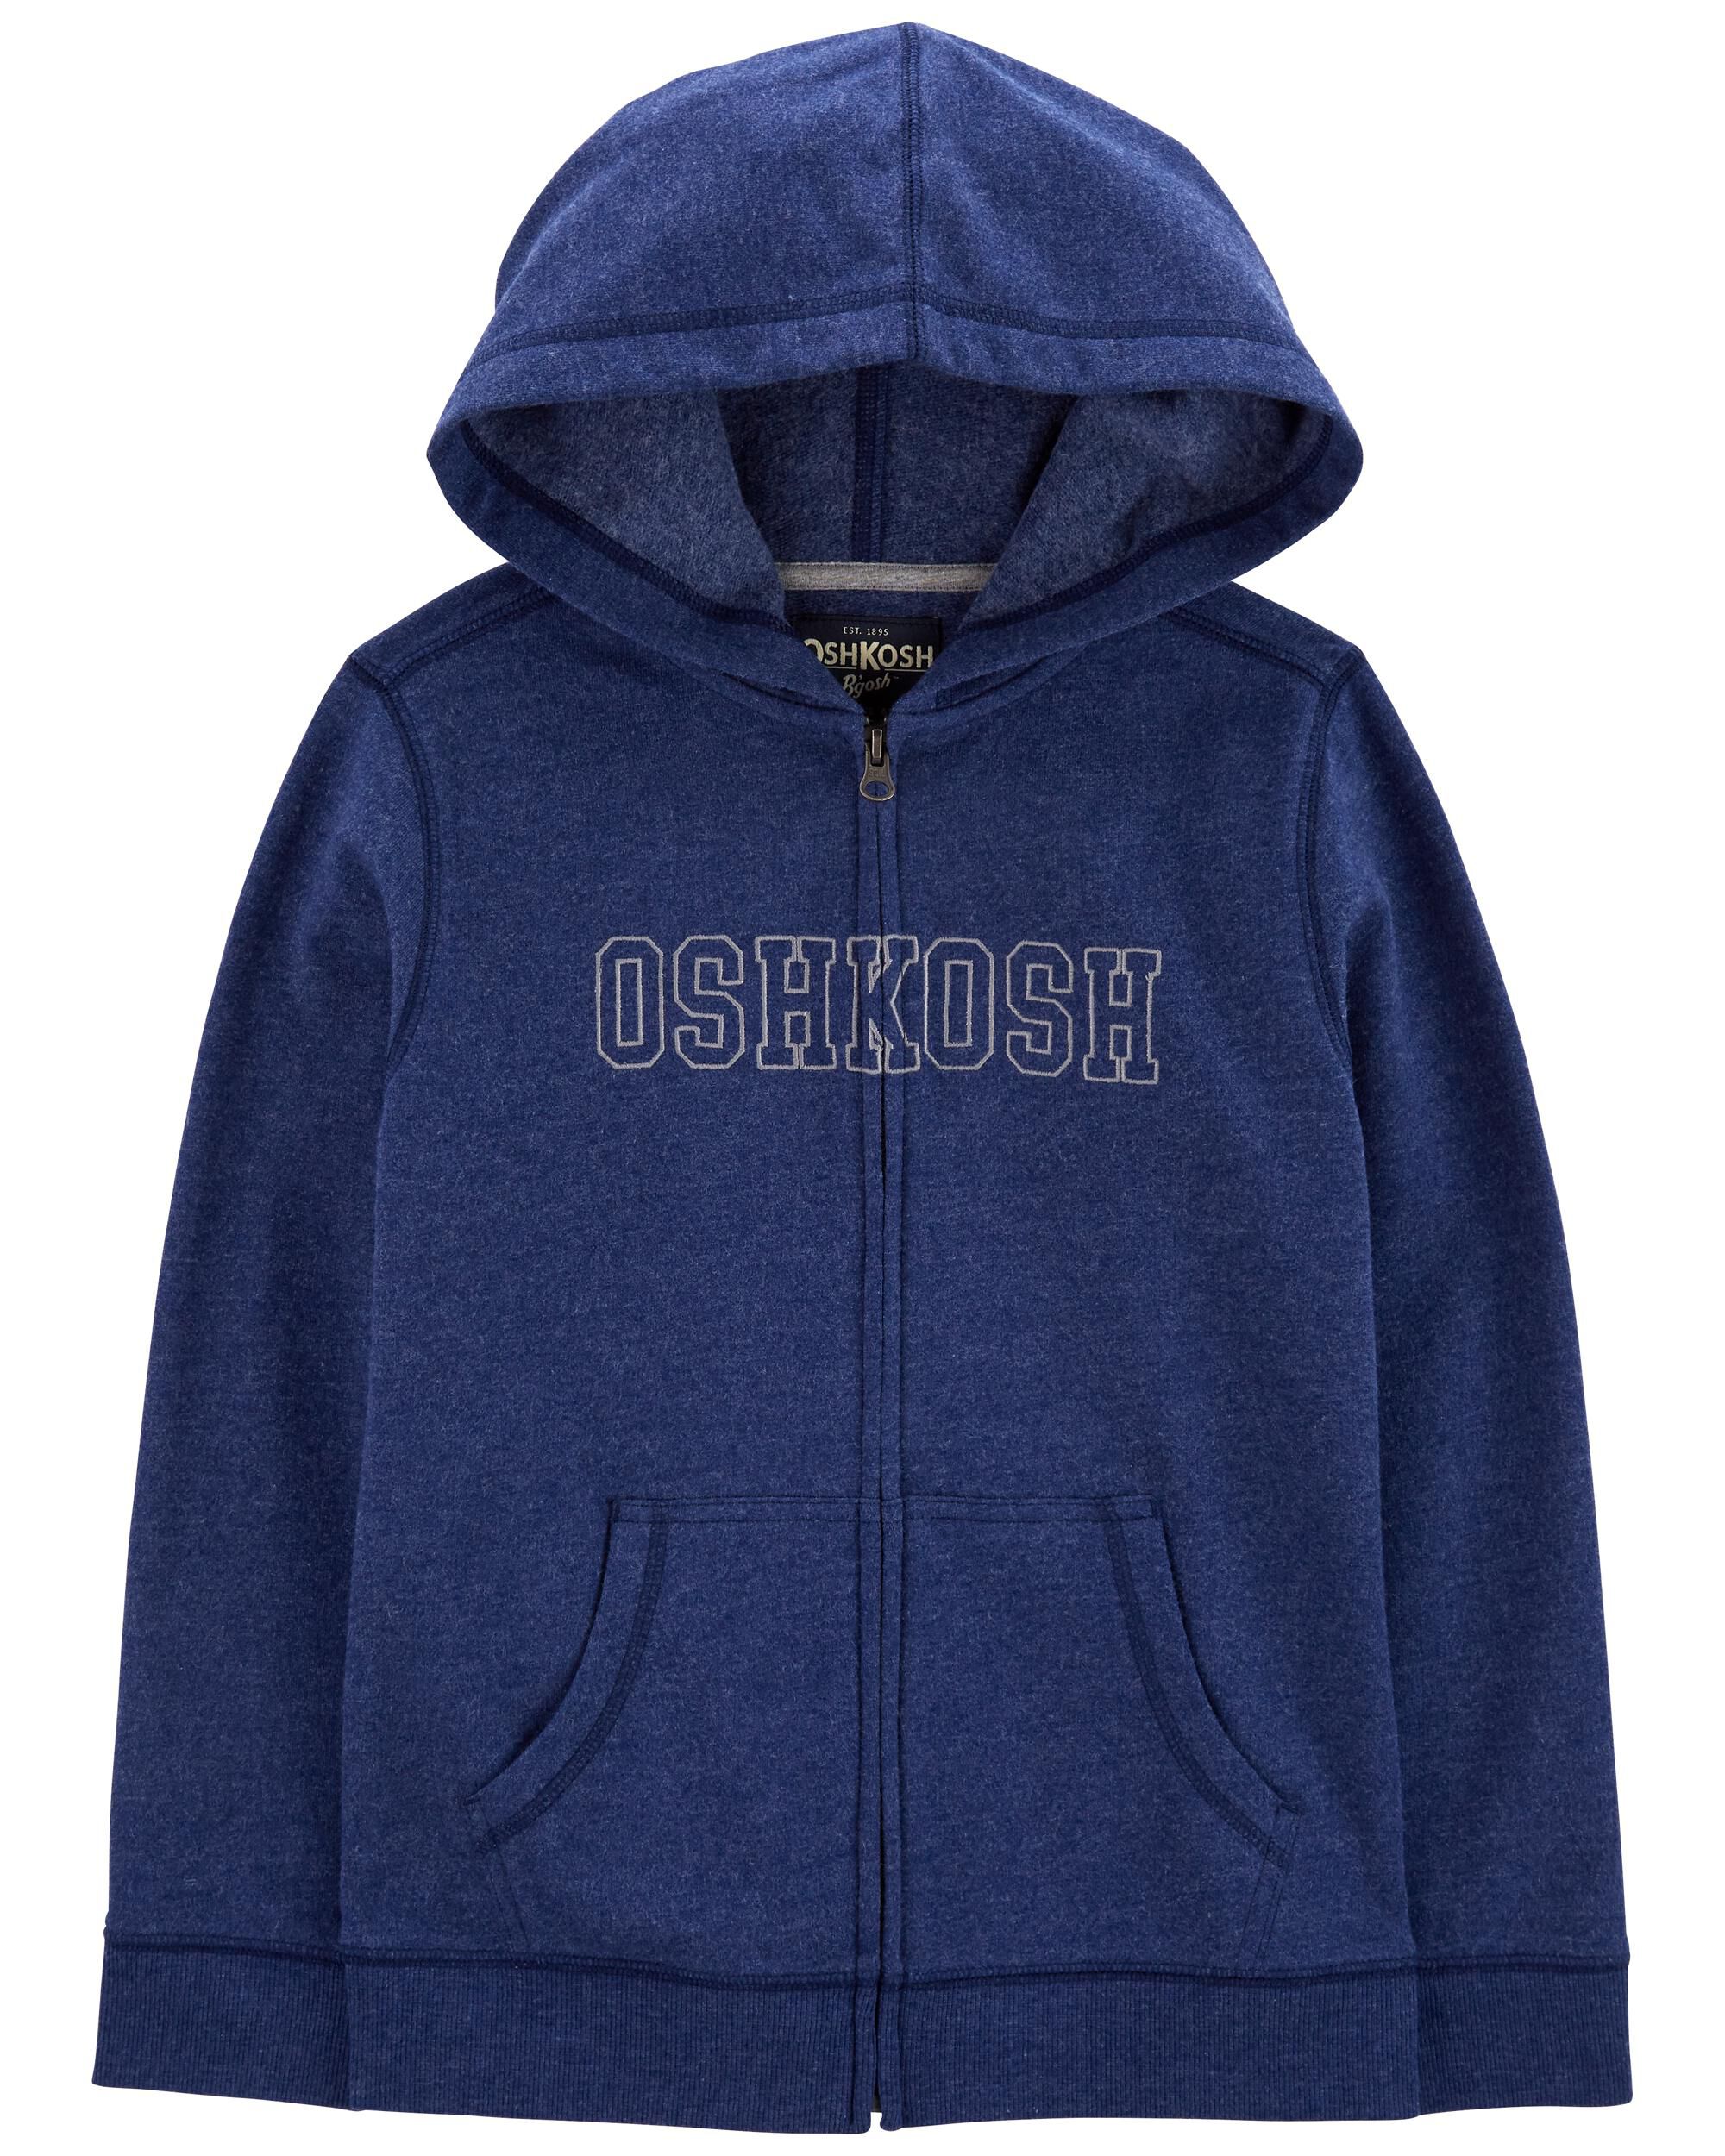 KIDS FASHION Jumpers & Sweatshirts Fleece discount 63% Primark sweatshirt Blue 